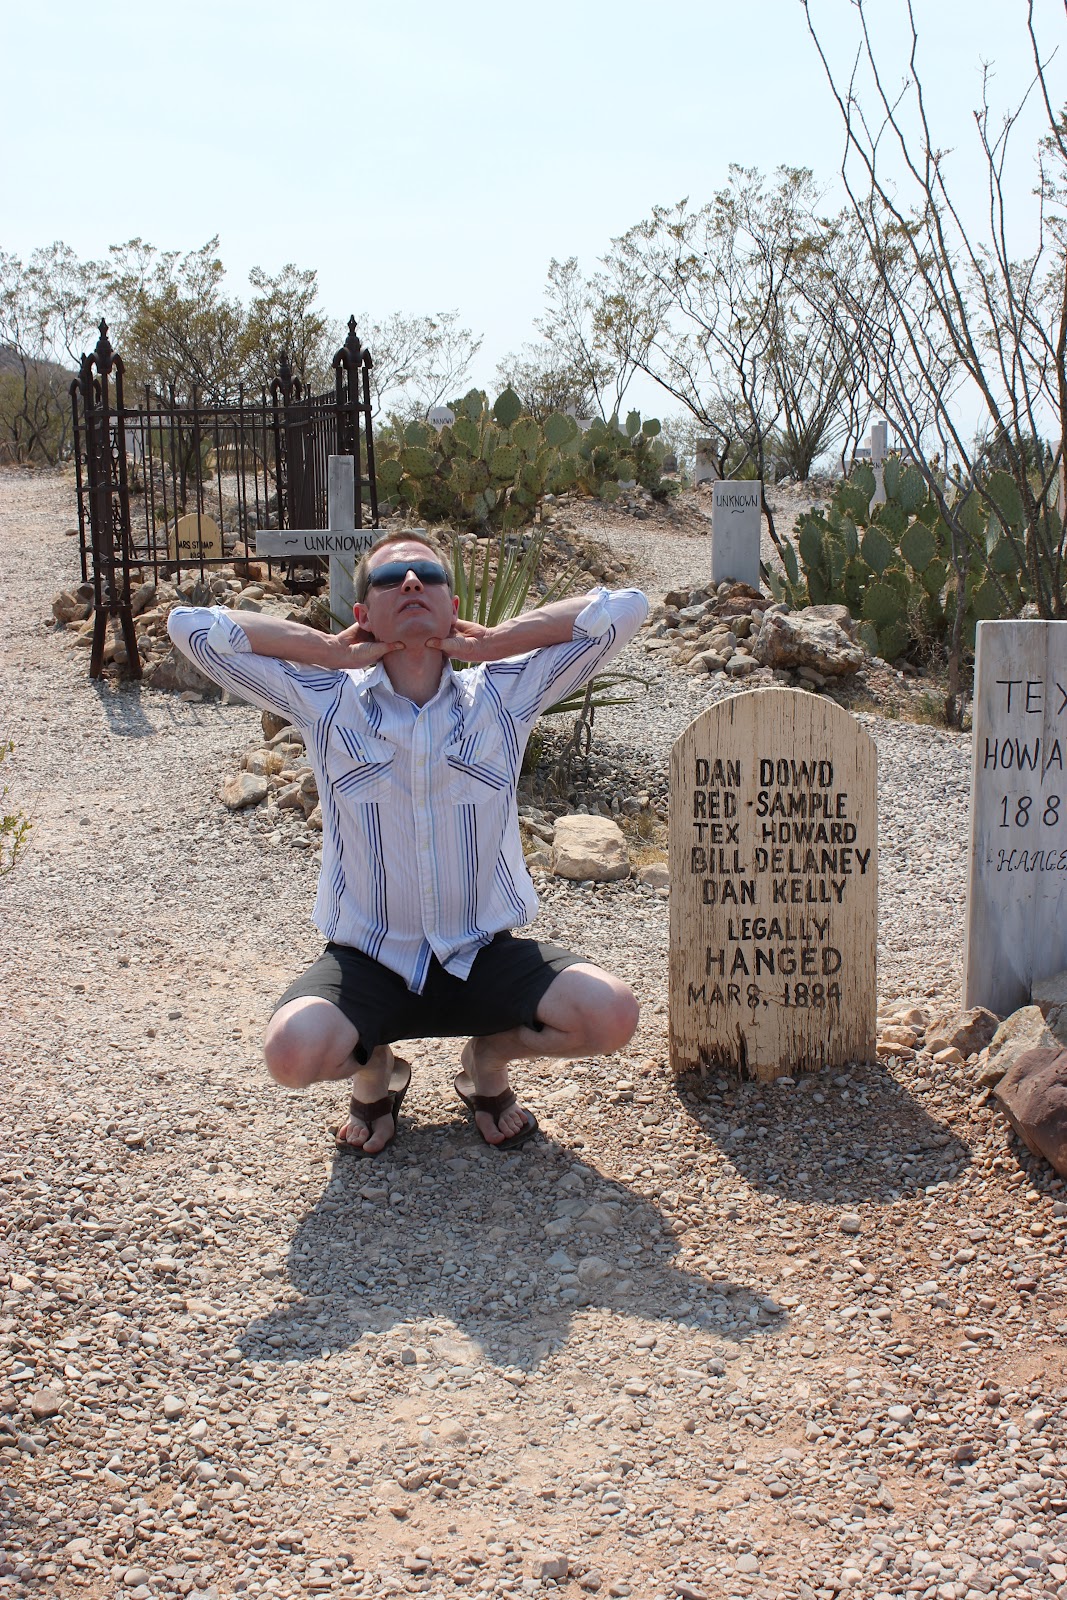 Boothill Graveyard descriptive headstones in Tombstone Arizona. 